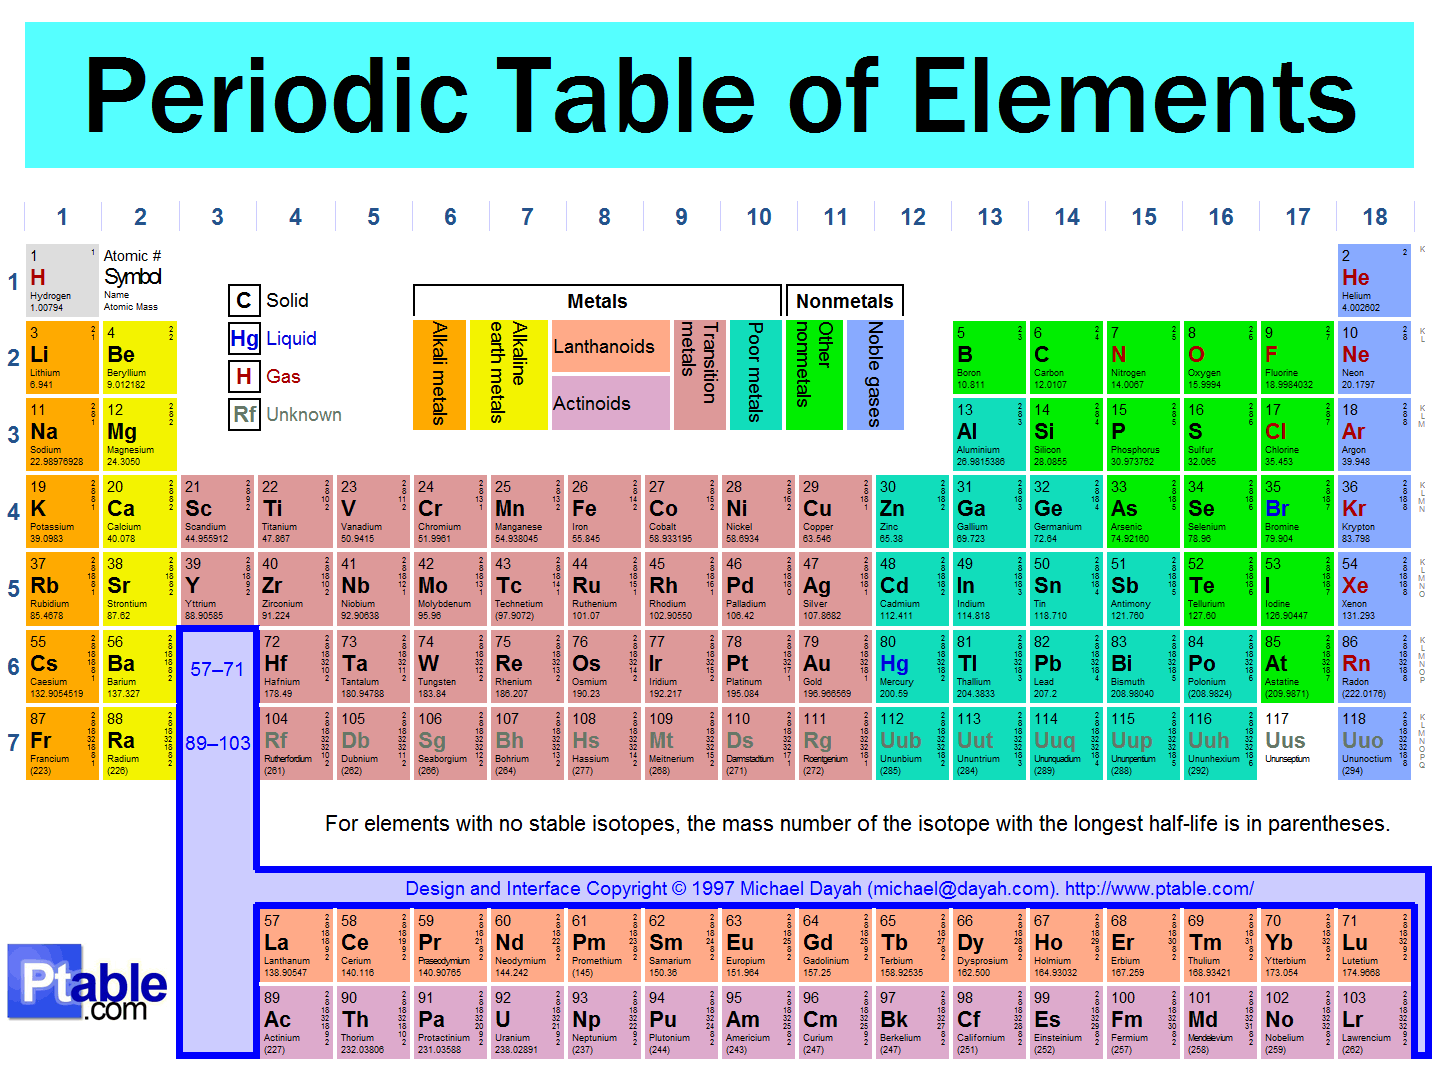 Element #24